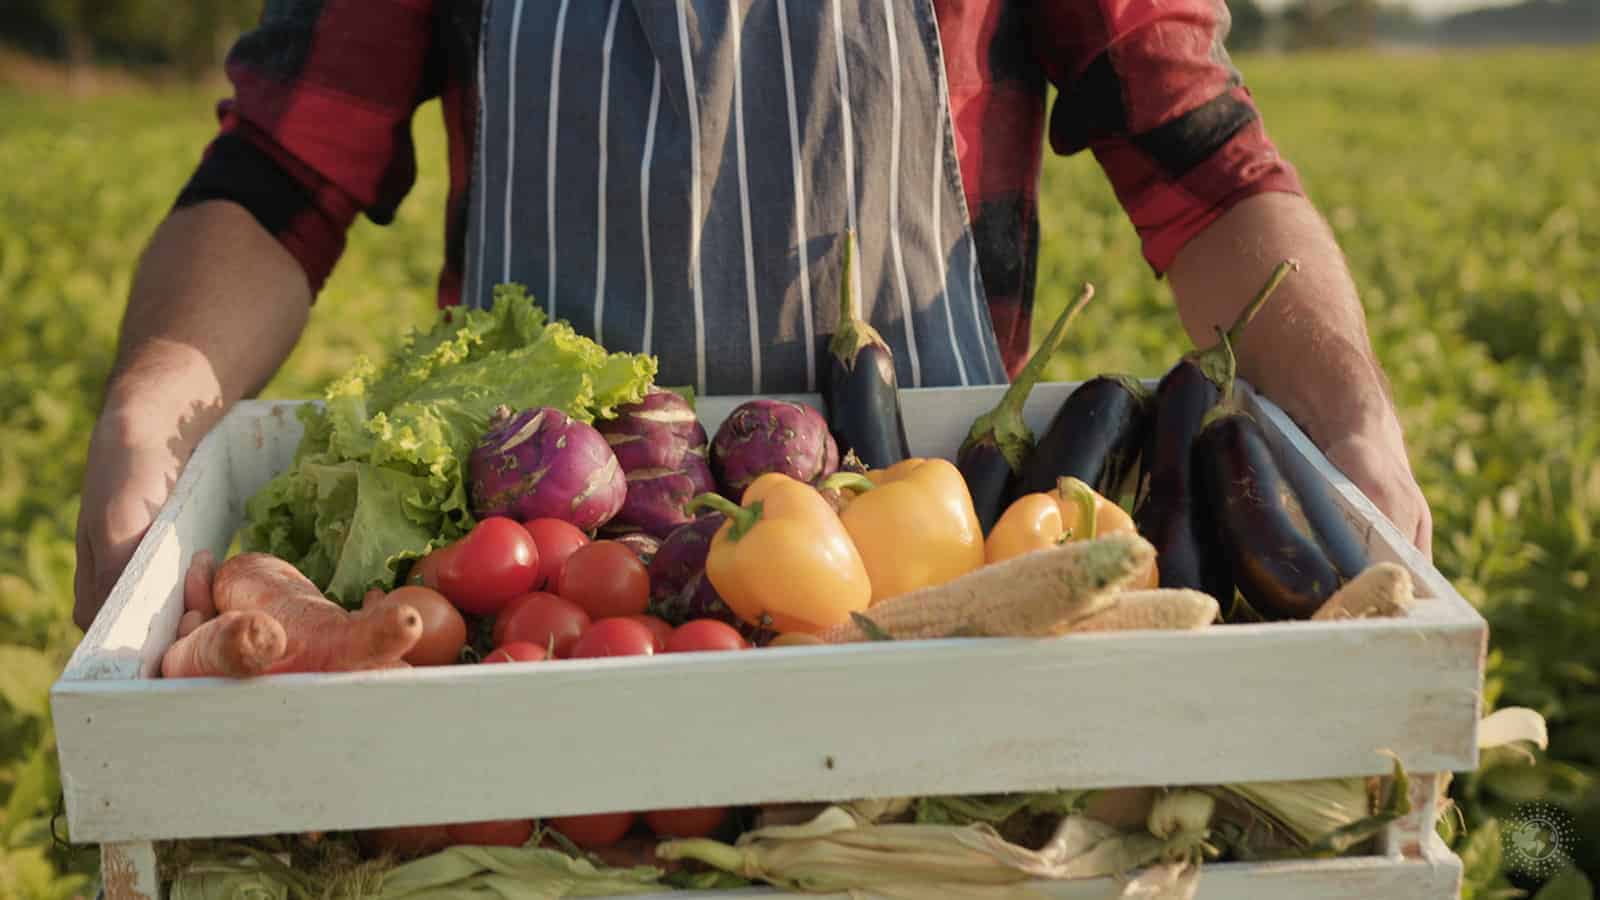 Researchers Explain 5 Benefits of Choosing Organic Produce